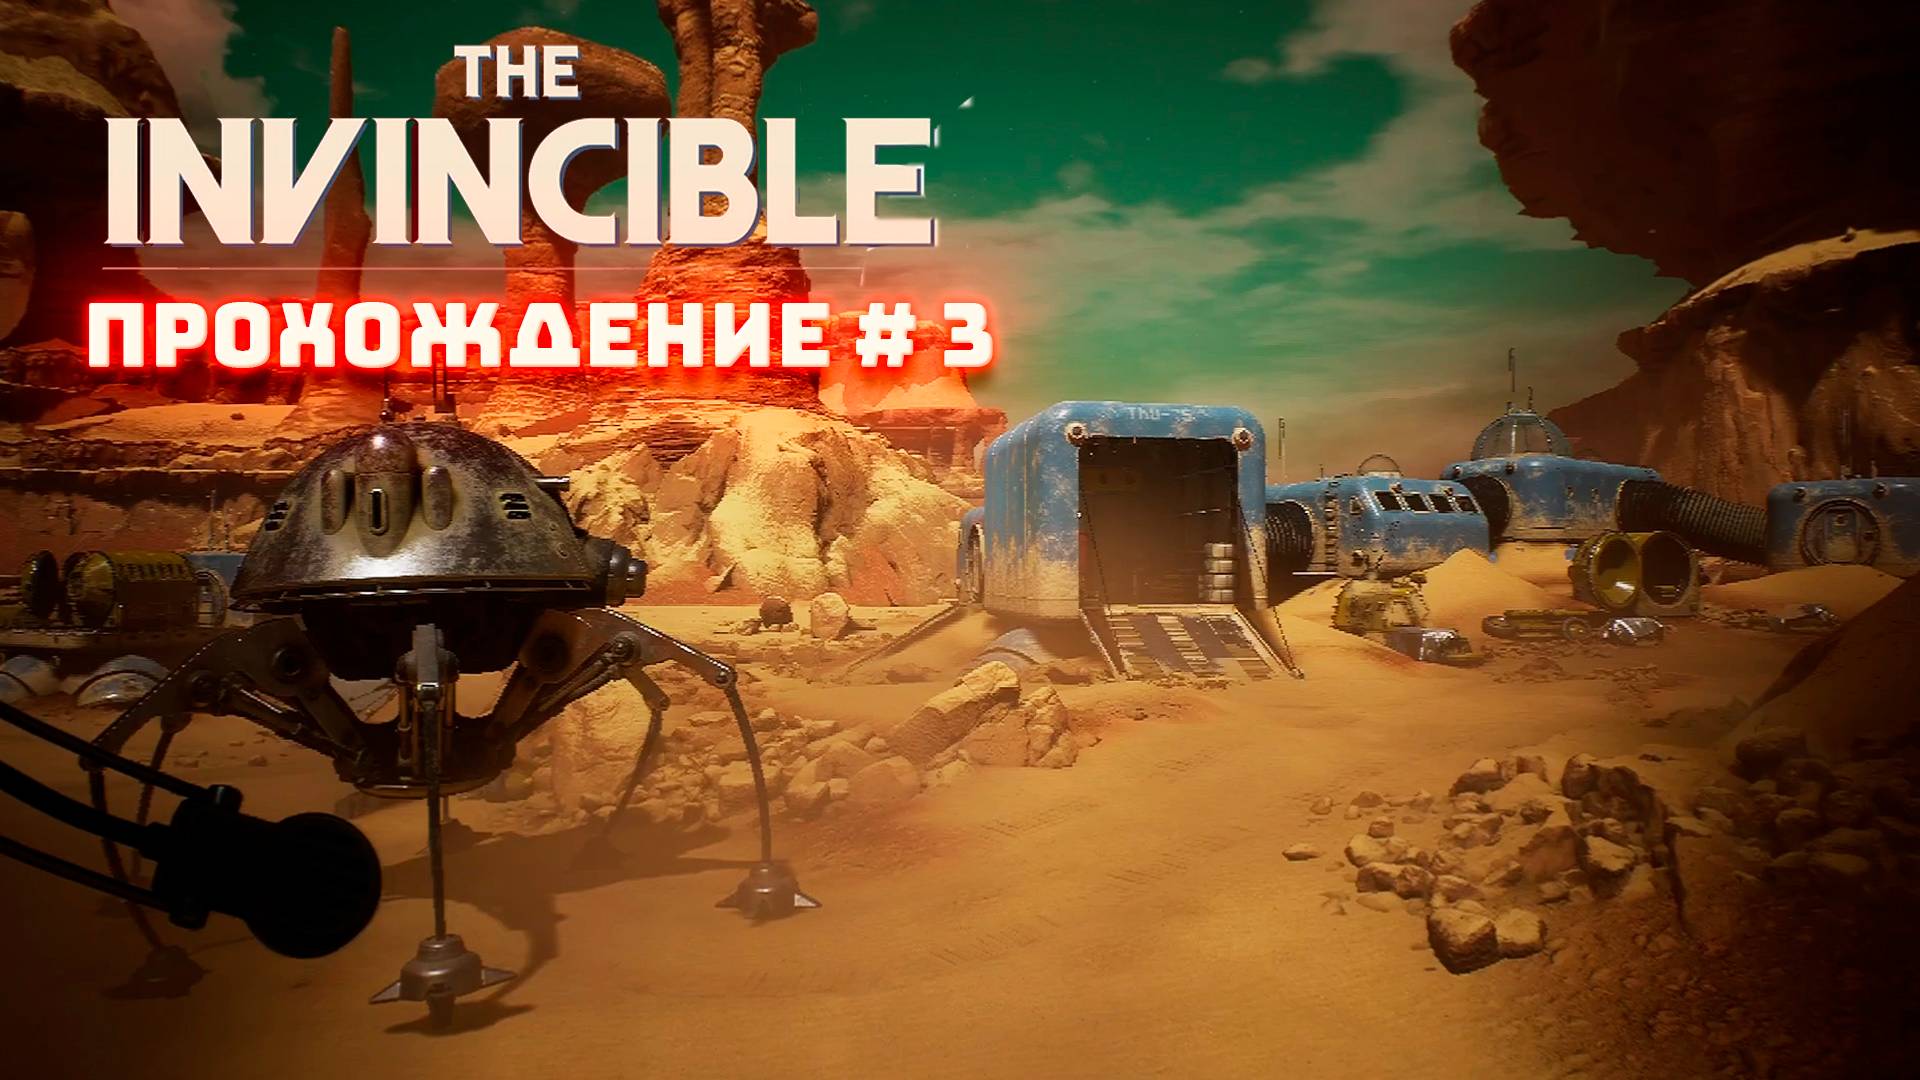 The Invincible. Станислав Лем. Часть 3. Прохождение.